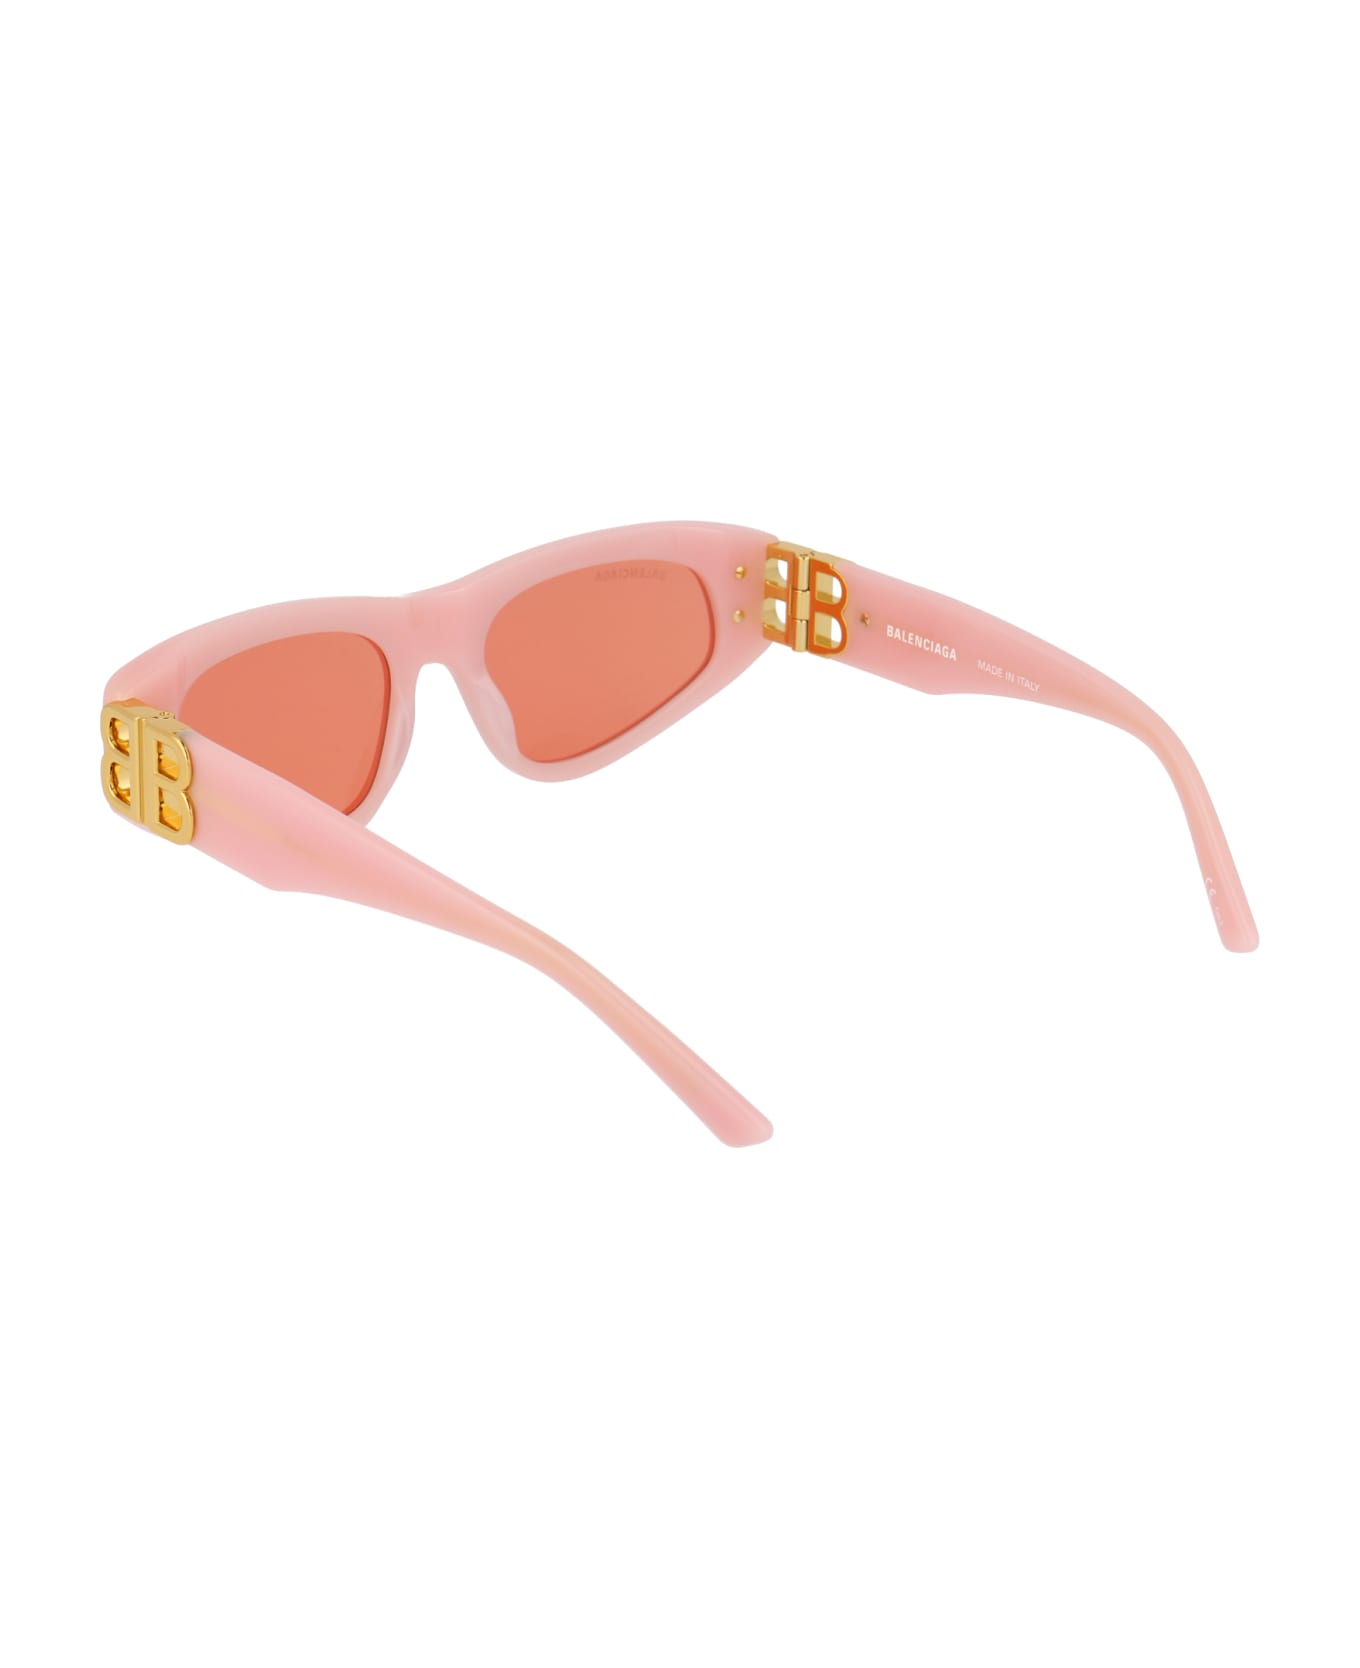 Balenciaga Eyewear Bb0095s Sunglasses - 003 PINK GOLD RED サングラス